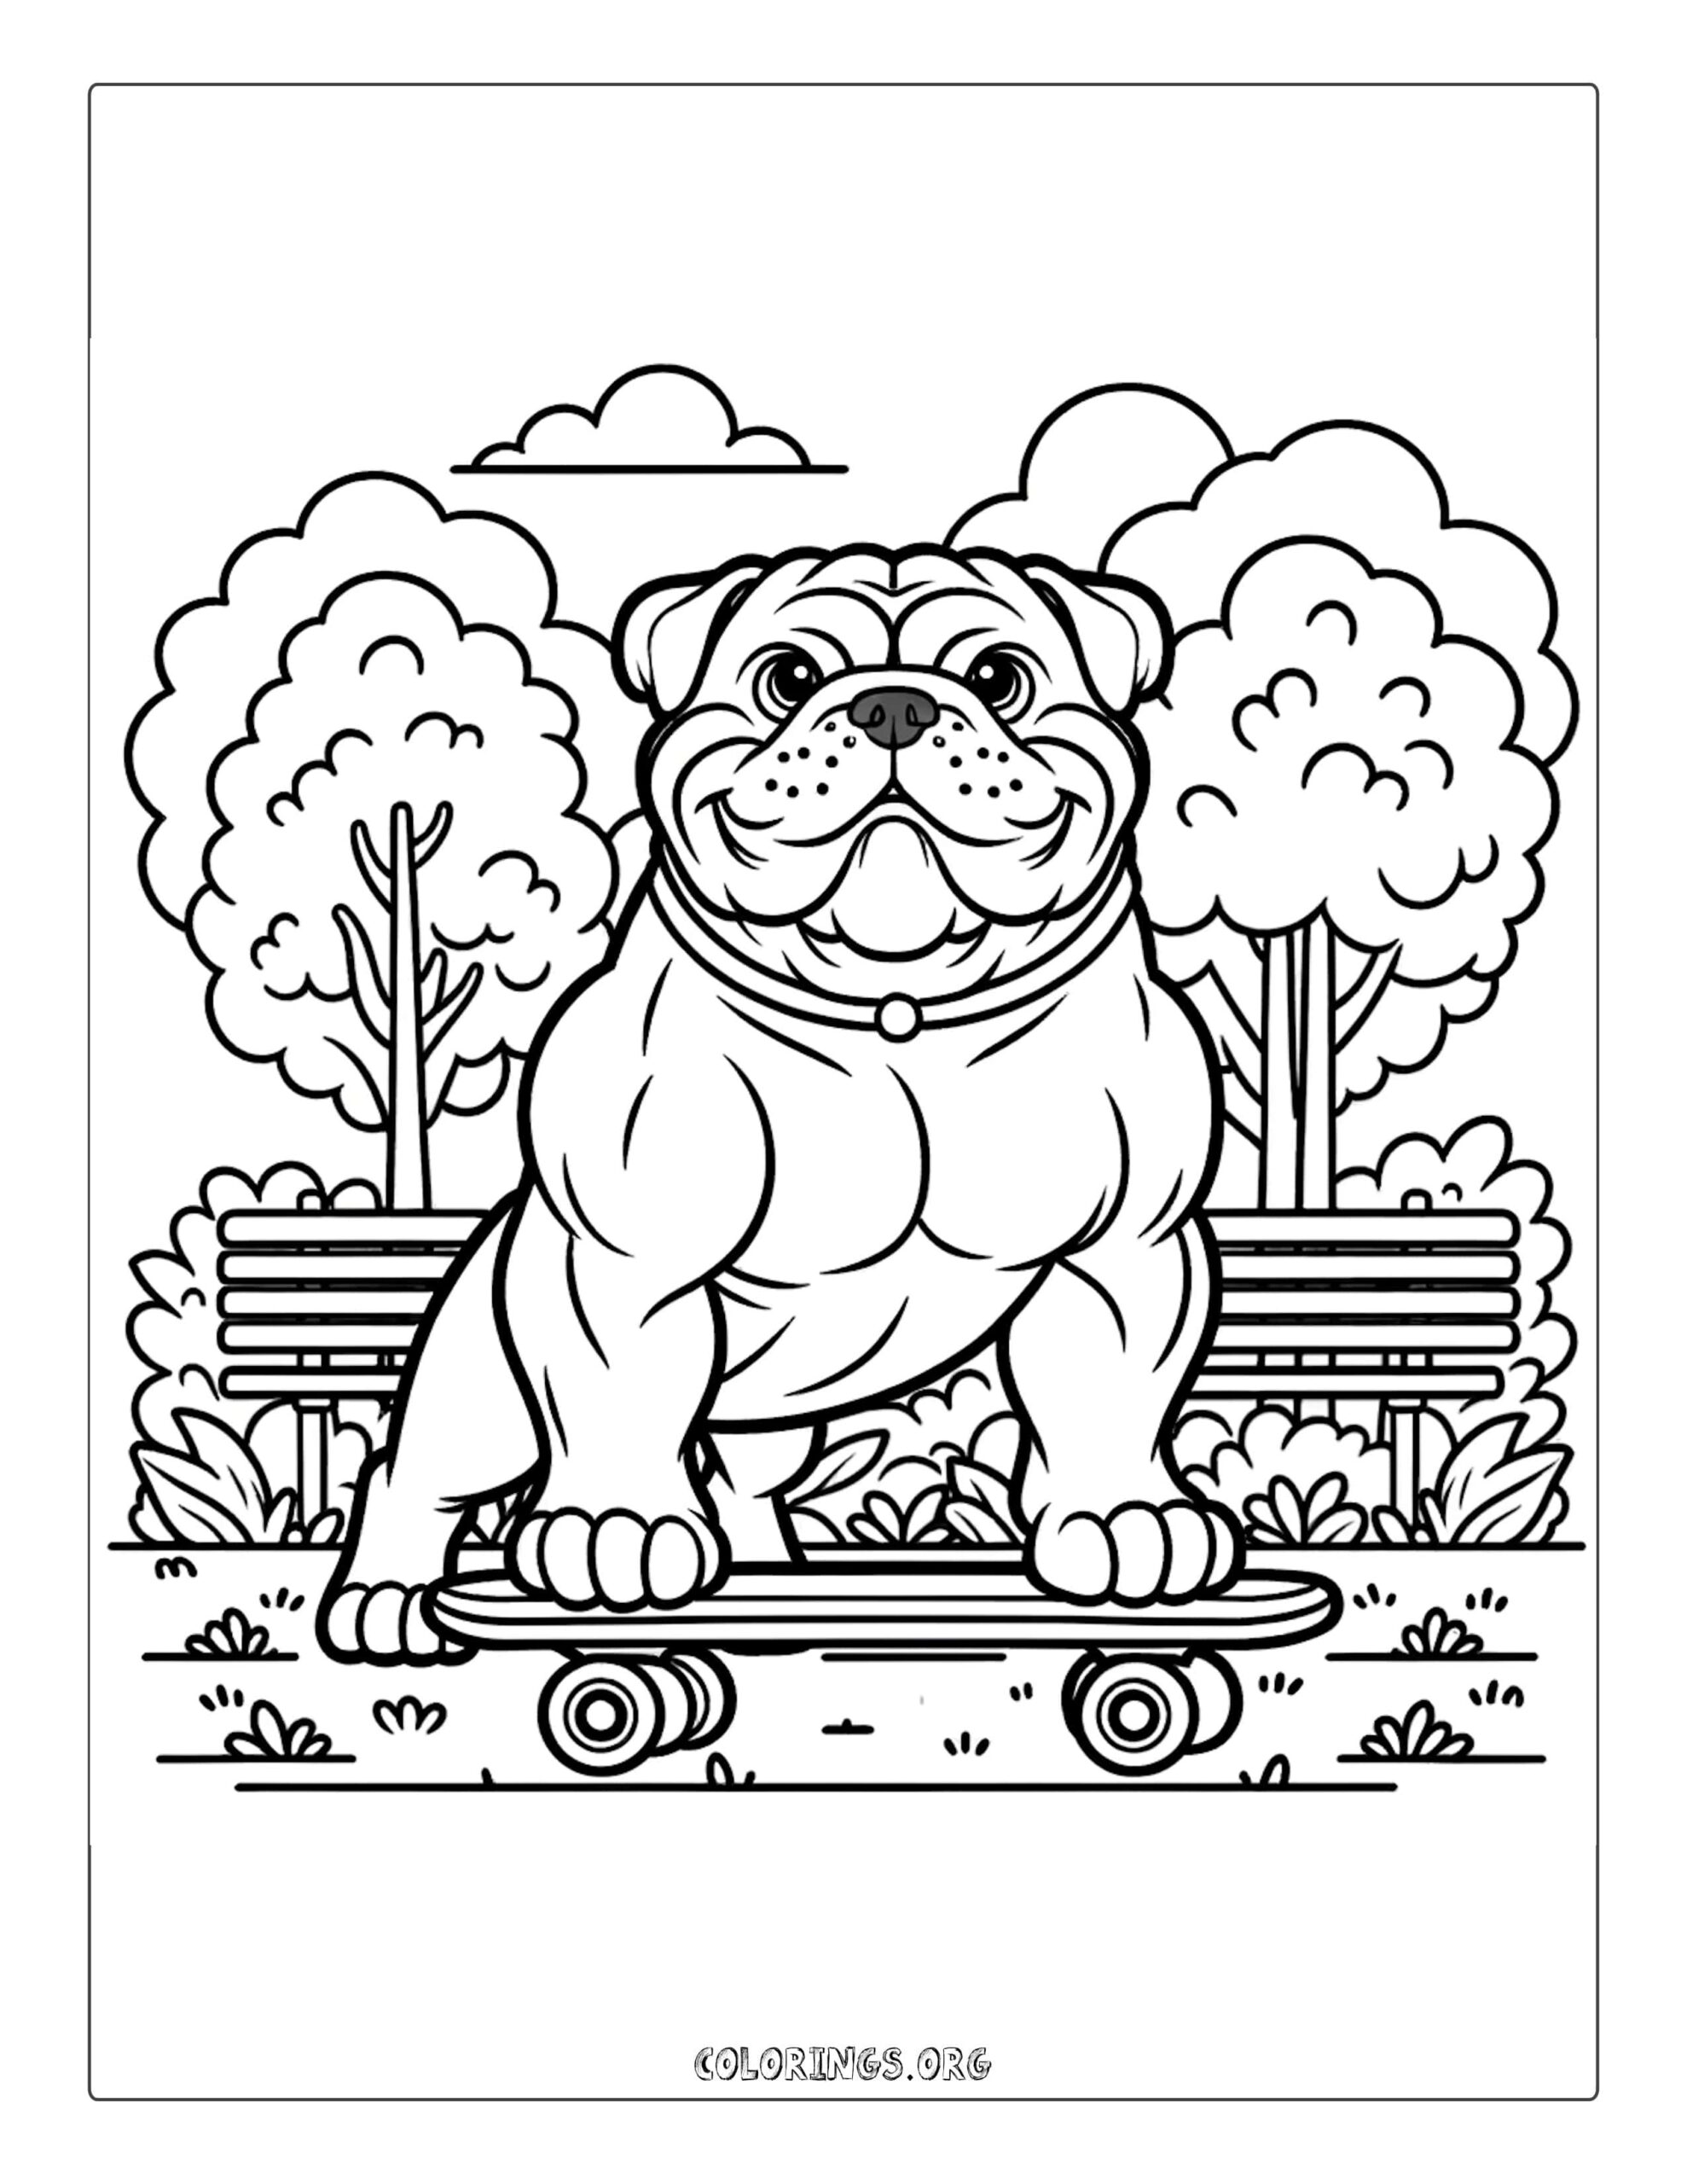 Bulldog with skateboard coloring page